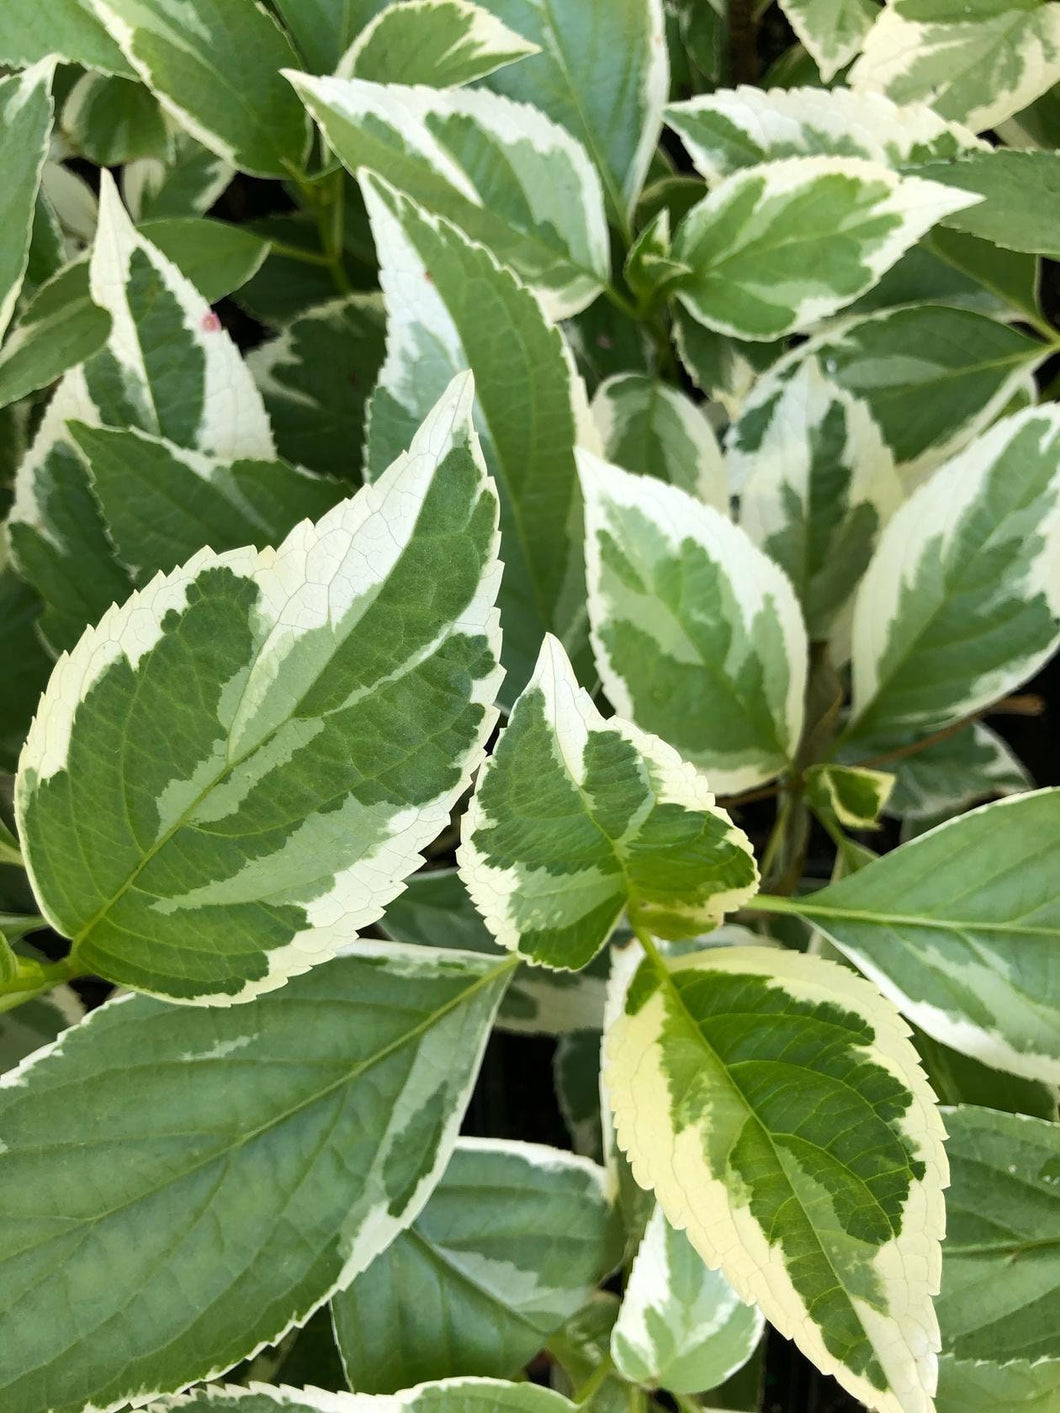  Hydrangea Silver lacecap or Hydrangea macrophylla Variegated Quart Plant**DORMANT** Southern Flower Garden  Southern Flower Garden